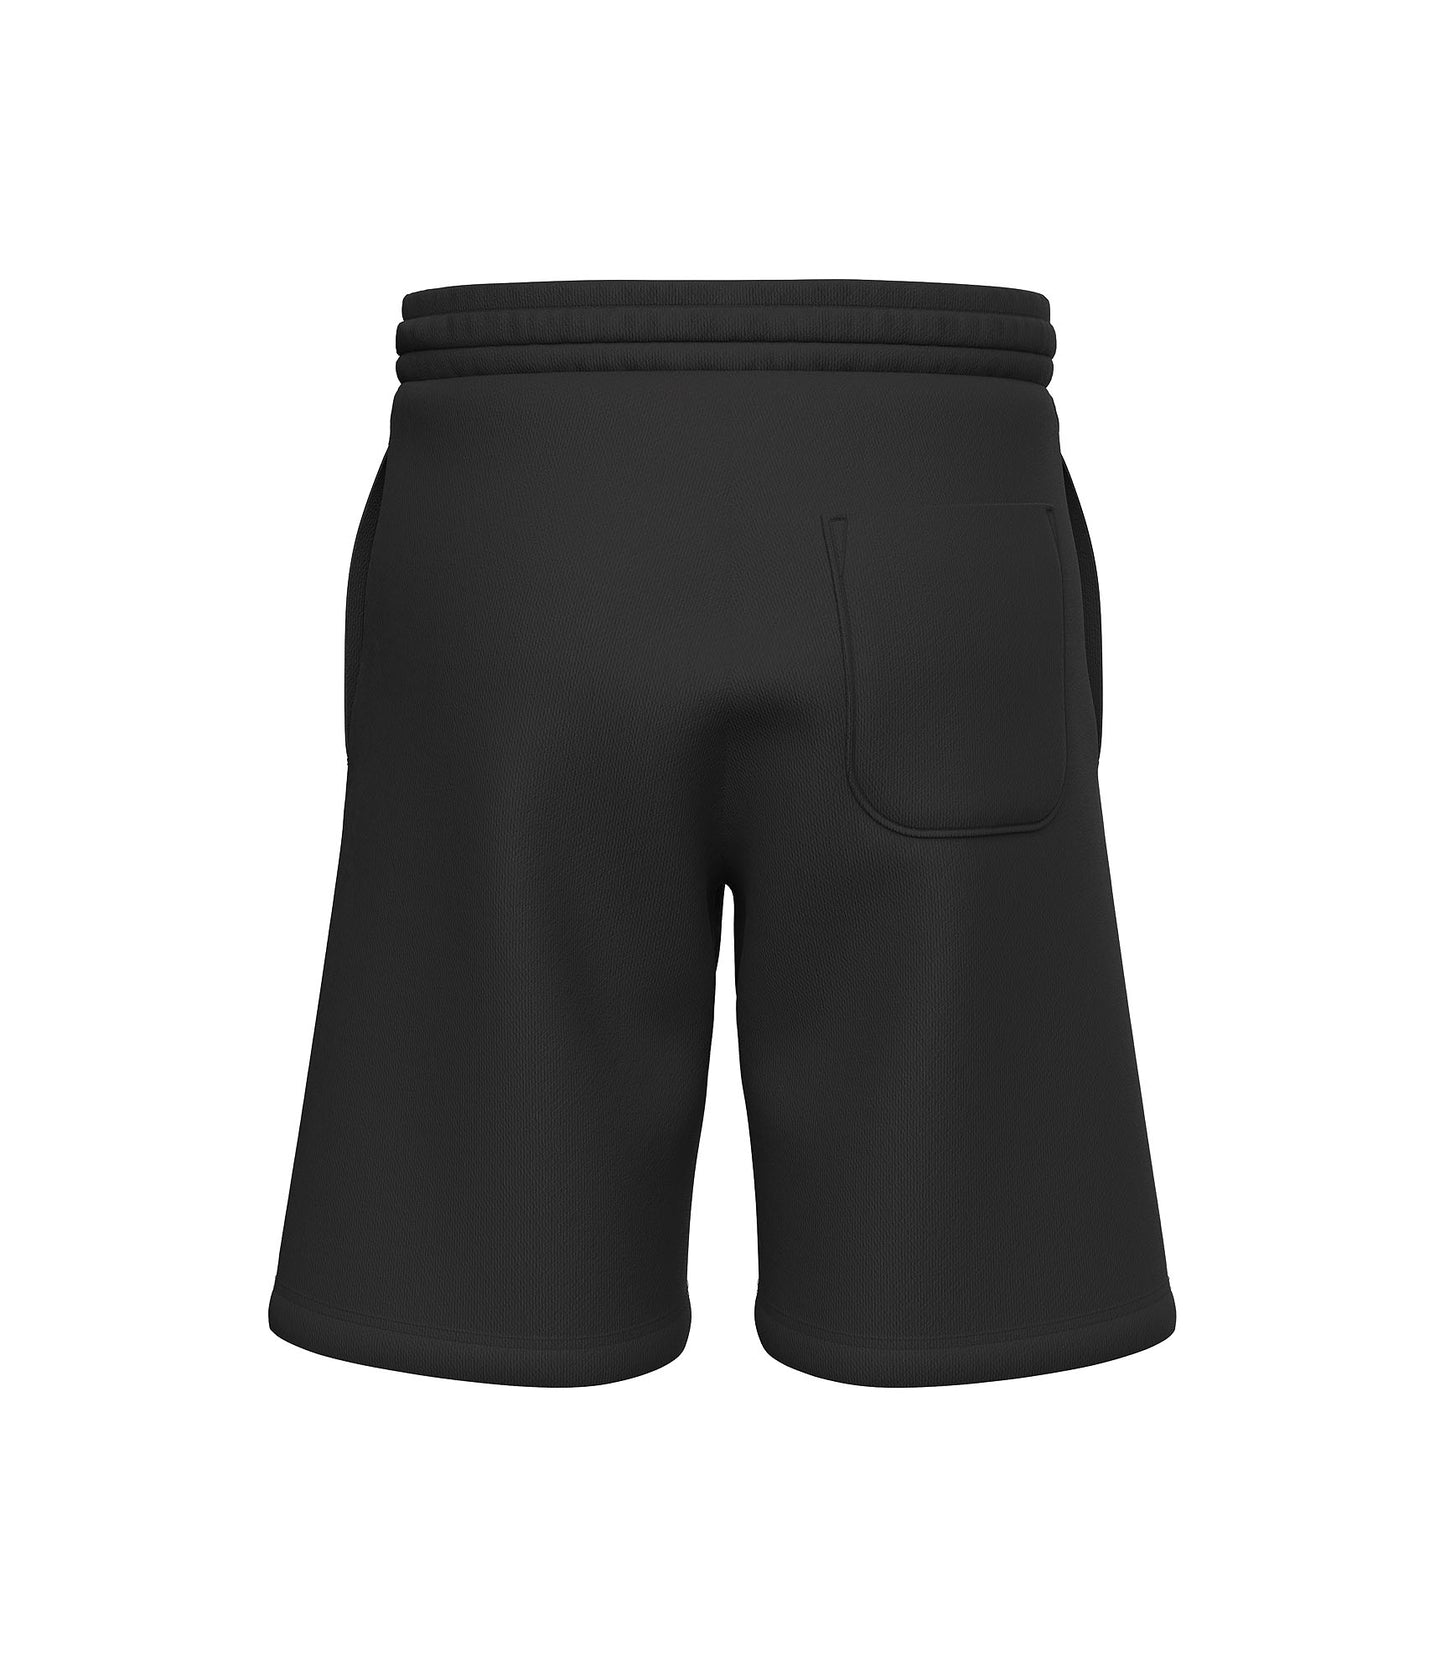 Diesel Boys Black Sweat Shorts_ J01733-K900